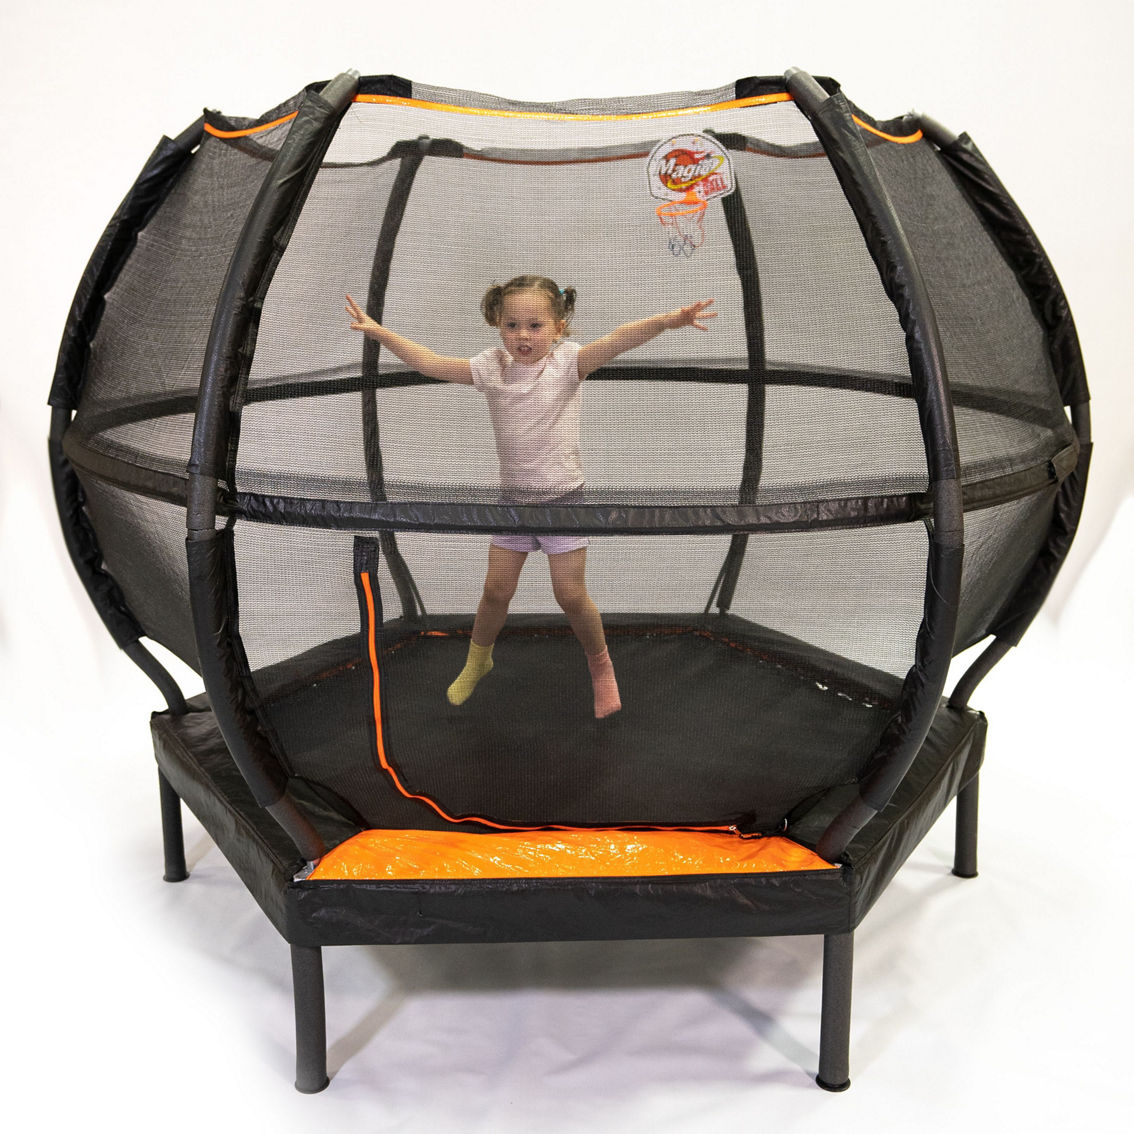 JumpKing 7' Heagonal Zorbpod Trampoline With Mini Basketball Hoop - Image 2 of 5